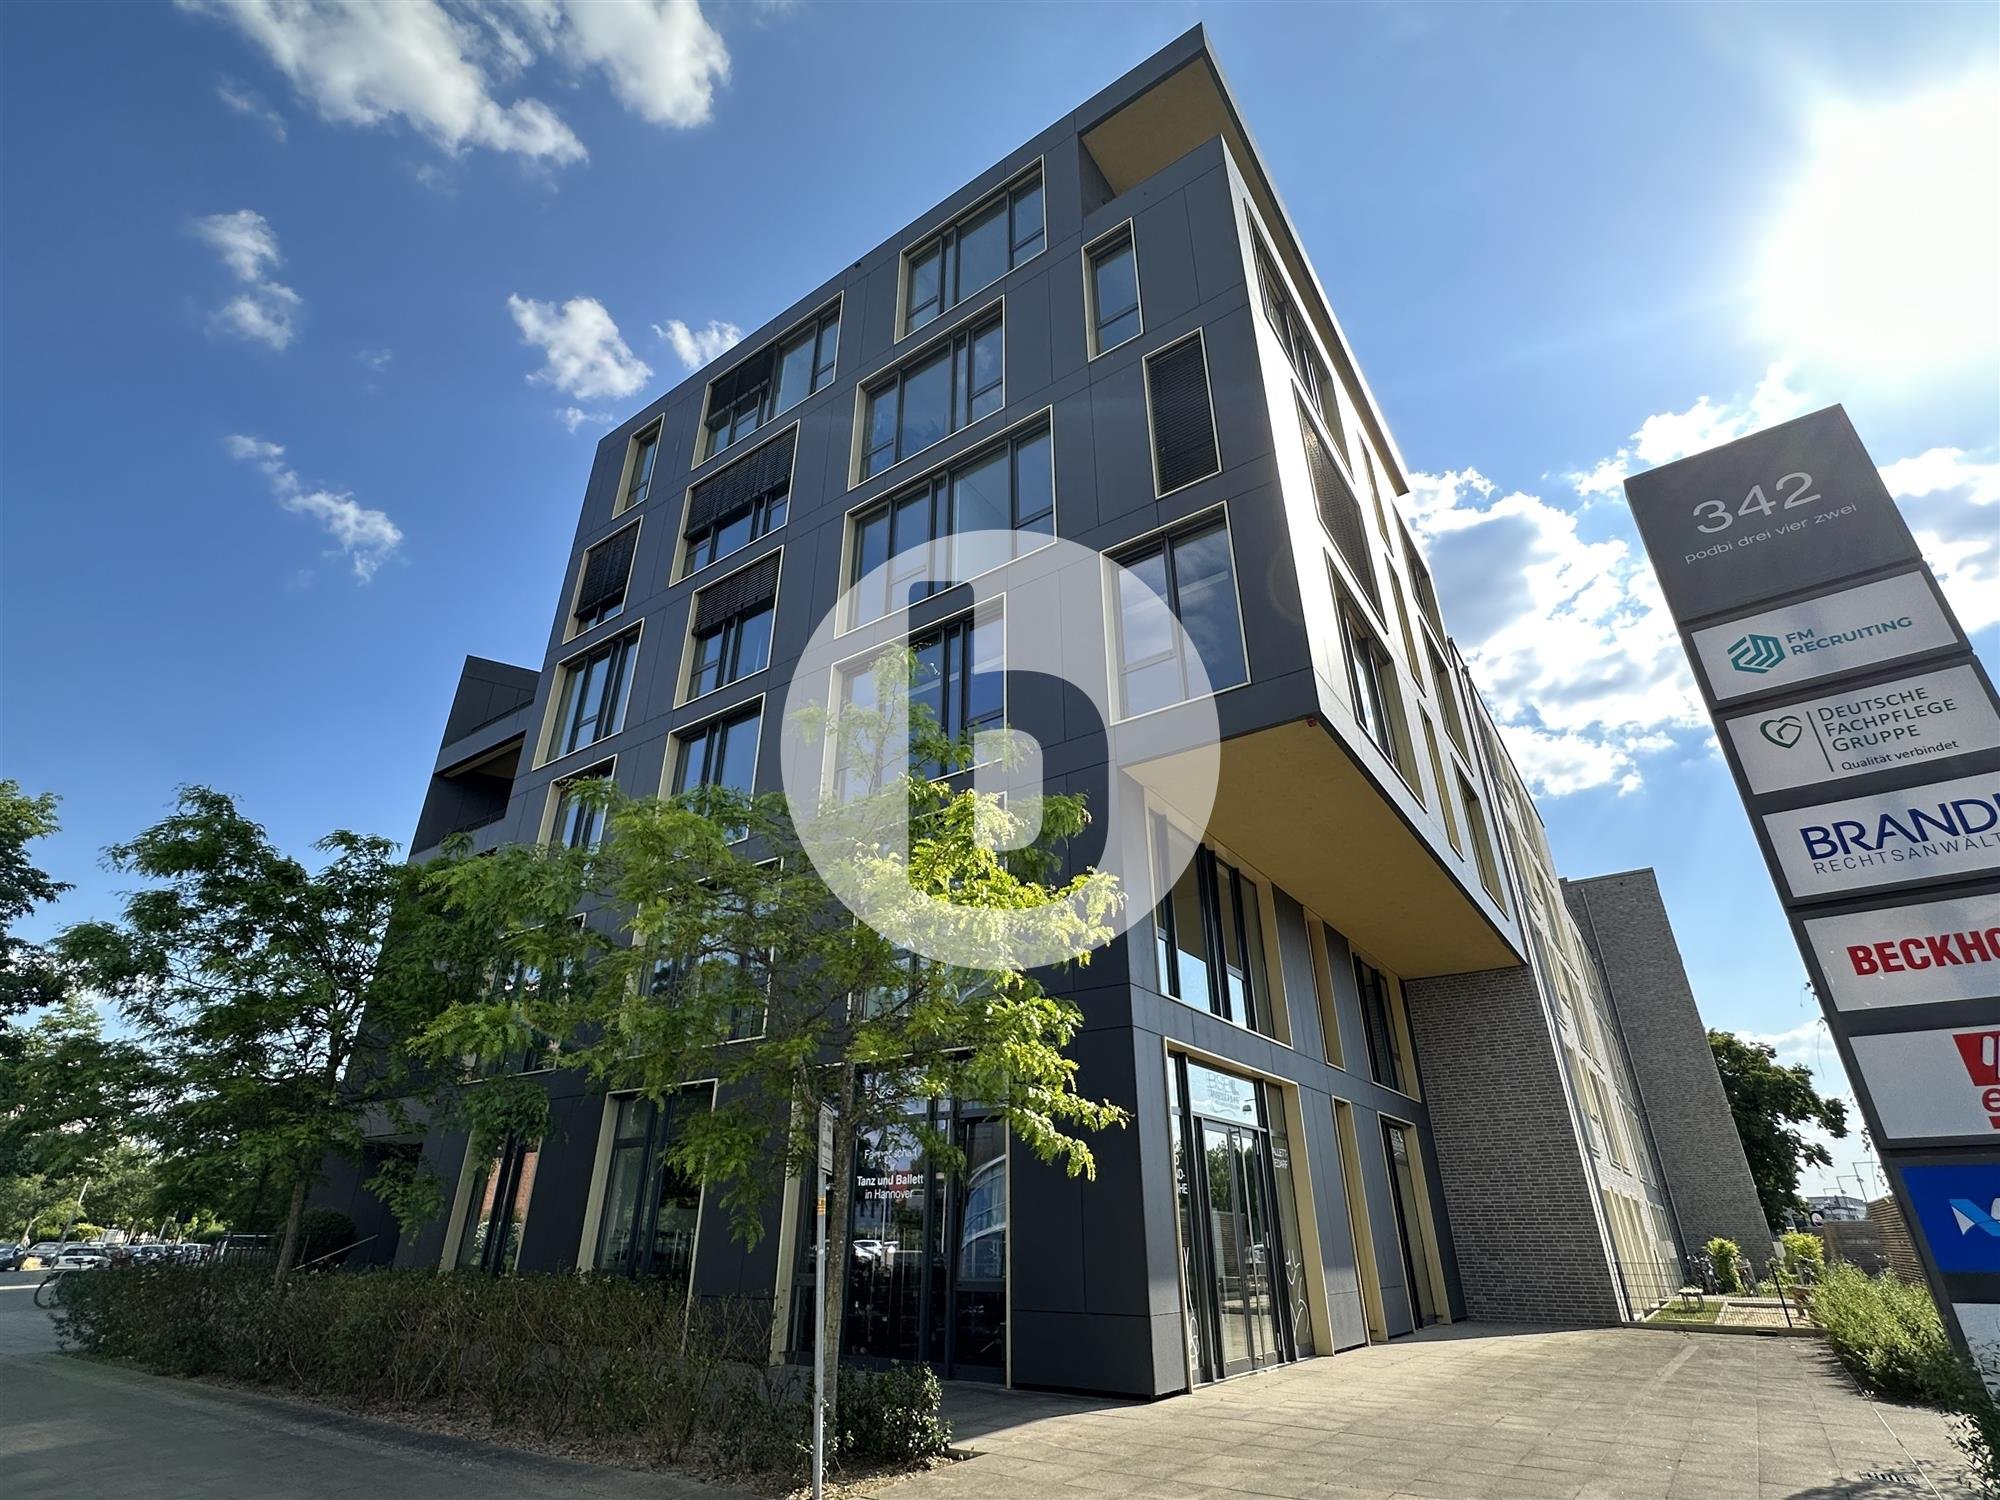 Bürogebäude zur Miete 14 € 602,5 m² Bürofläche Groß-Buchholz Hannover 30655